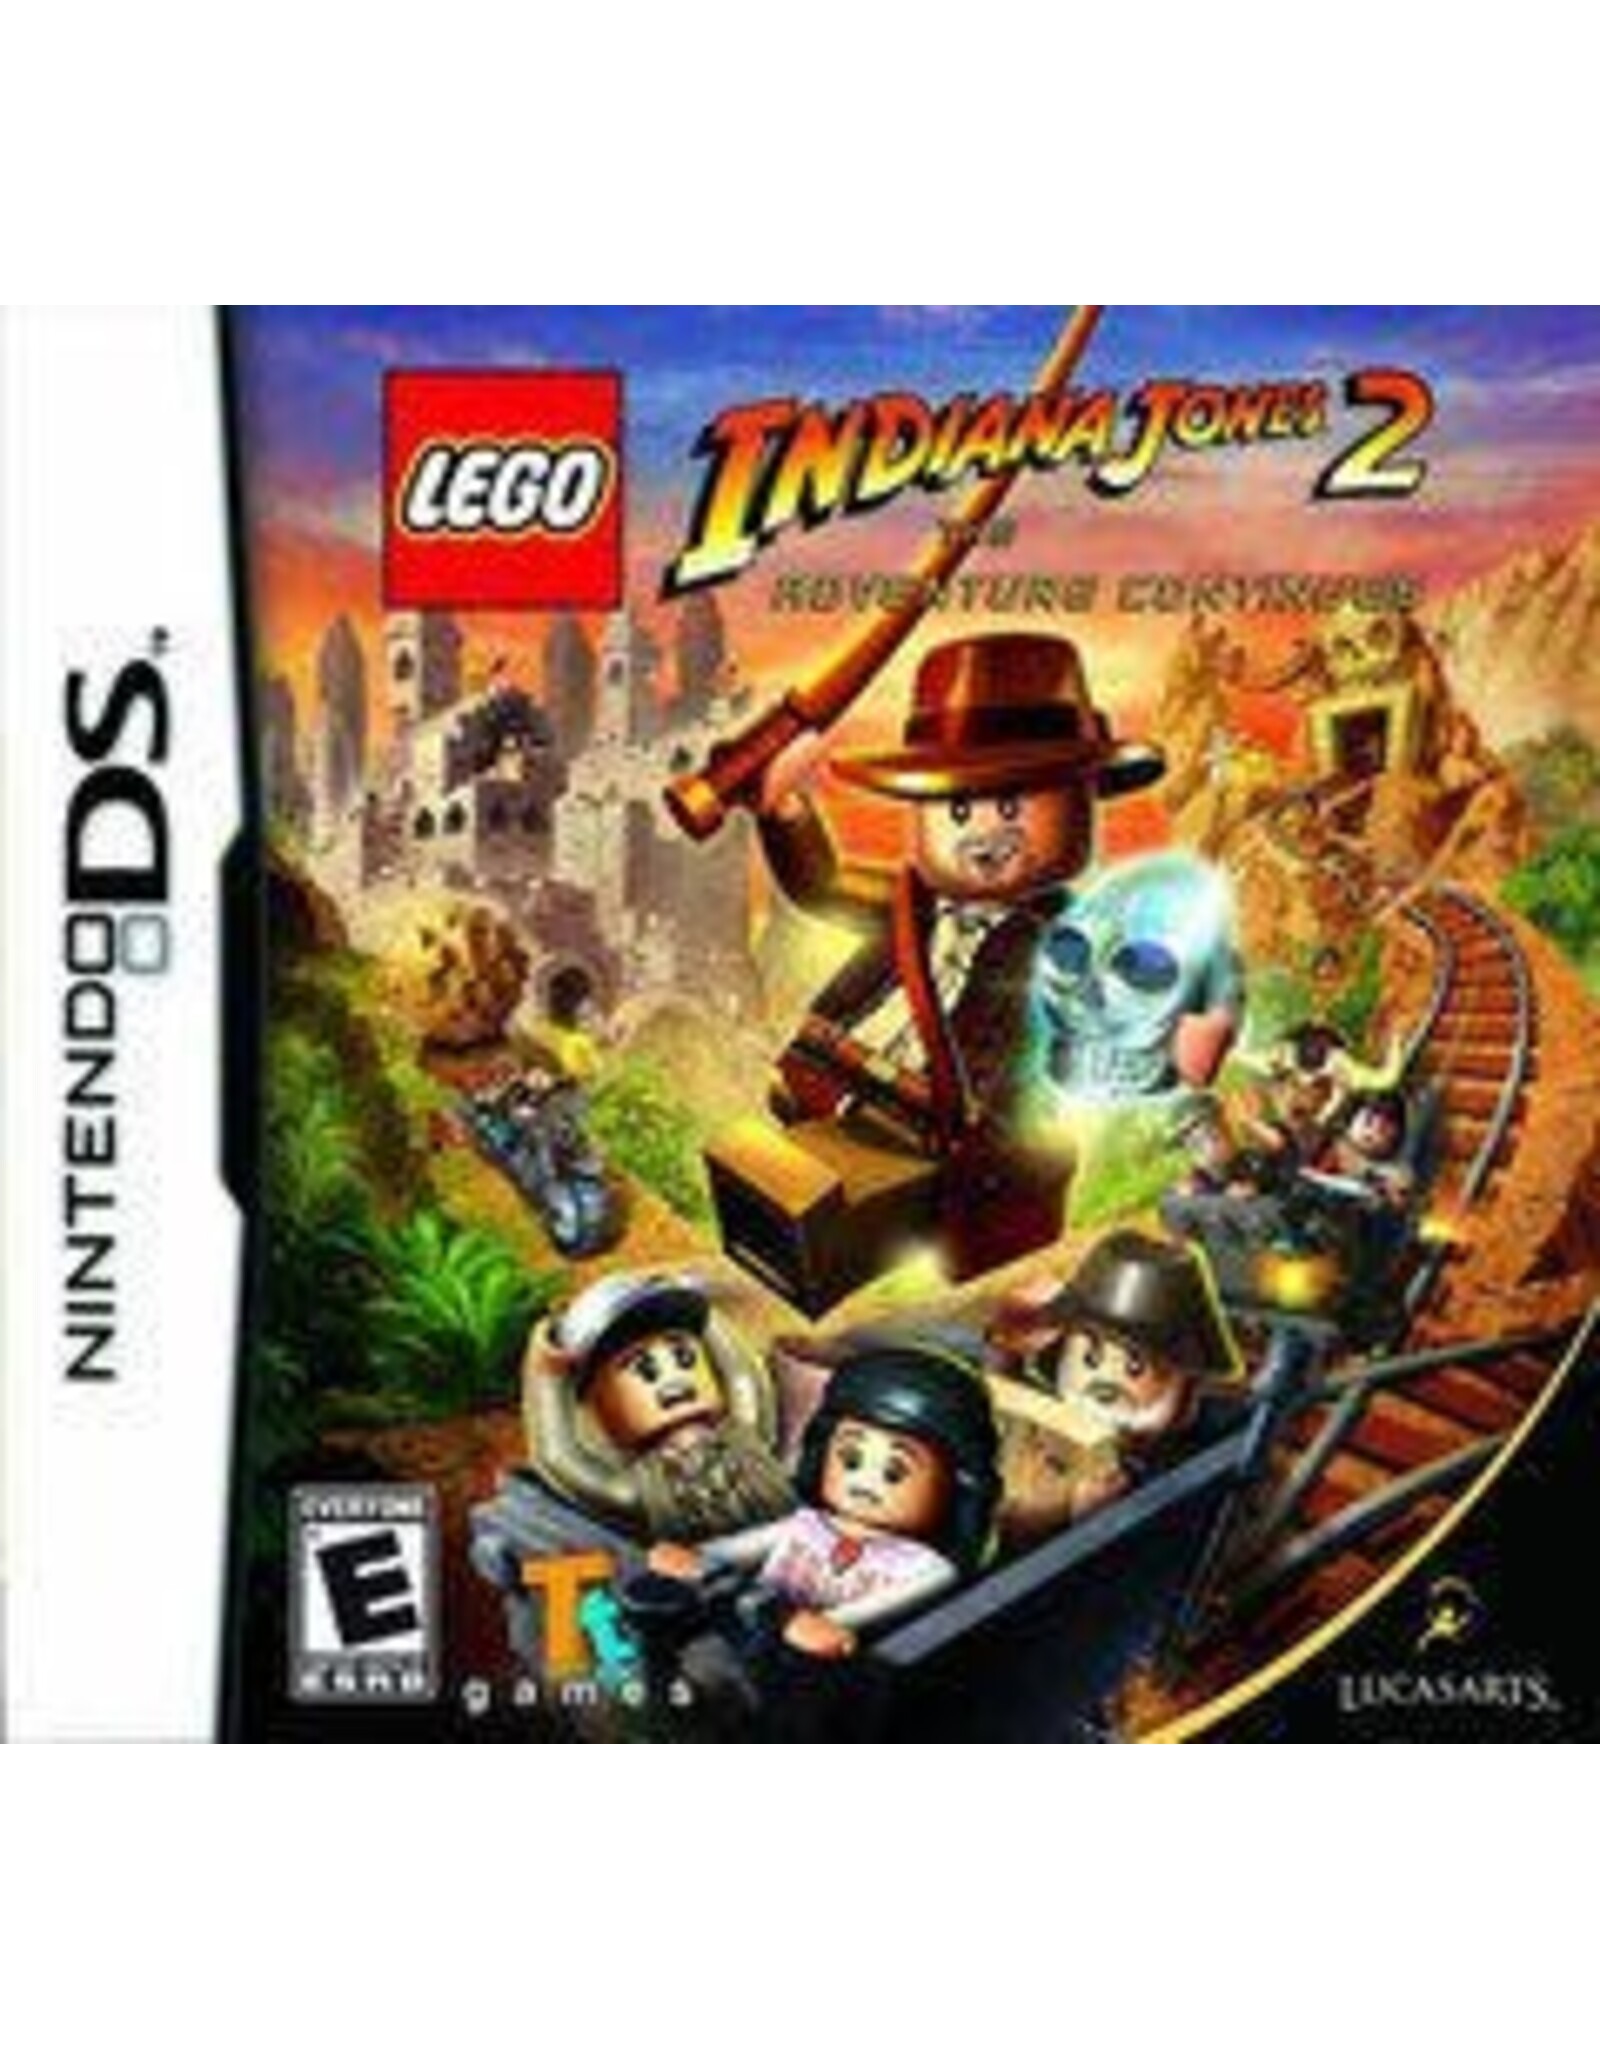 Nintendo DS LEGO Indiana Jones 2: The Adventure Continues (Used)